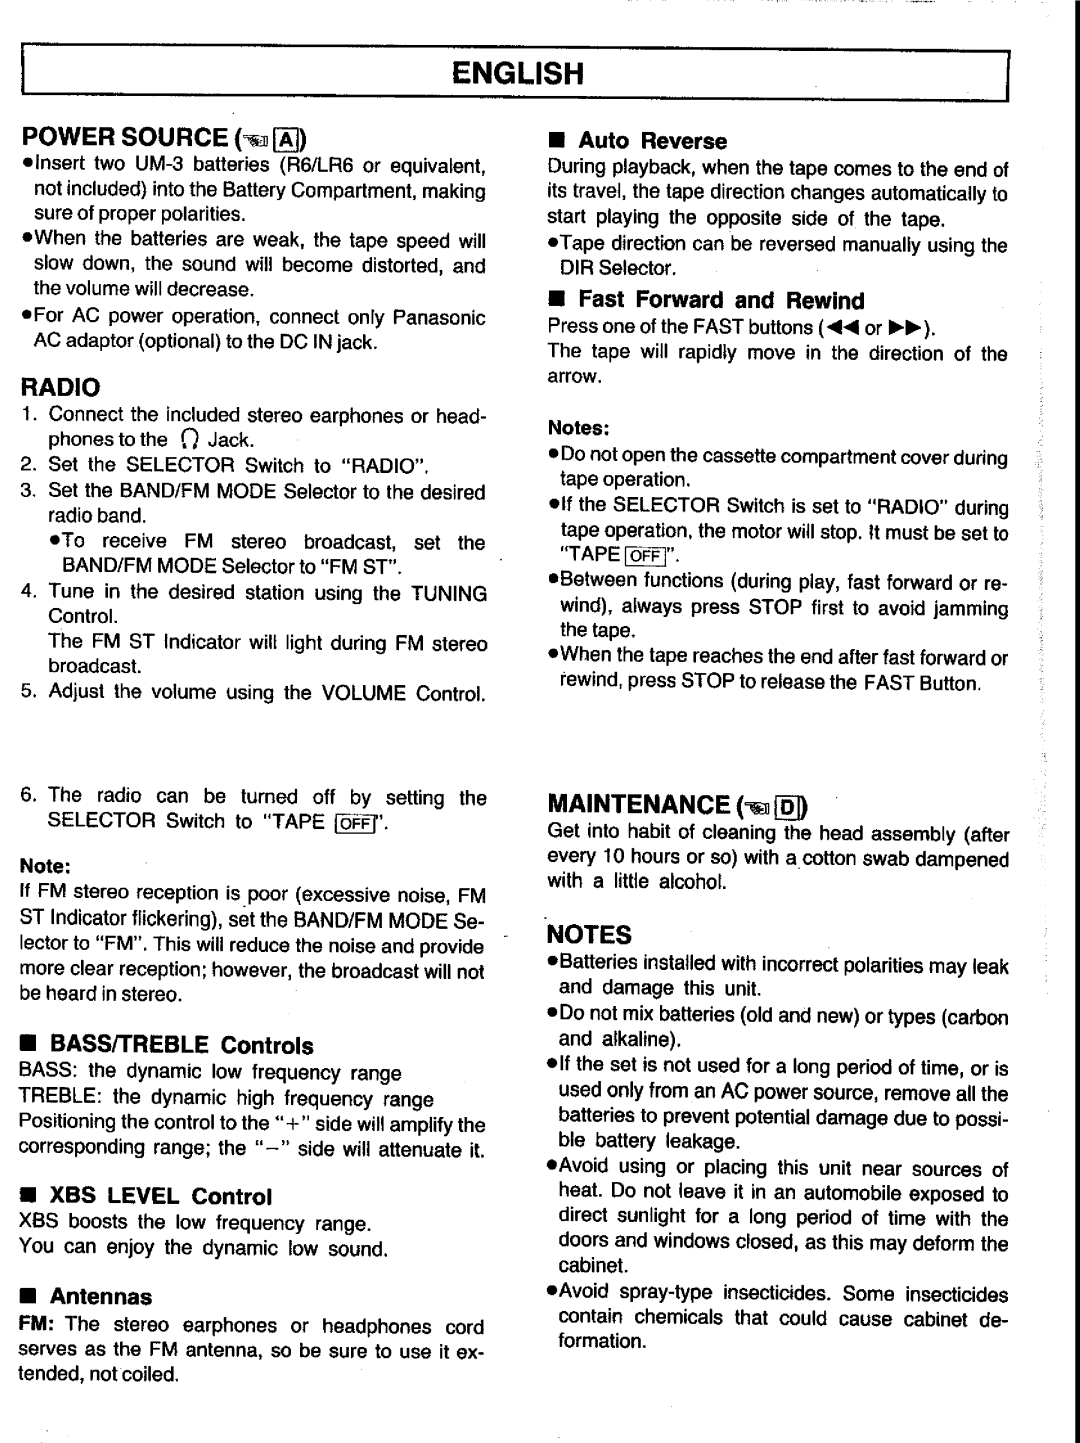 Panasonic RQ-V161 manual 